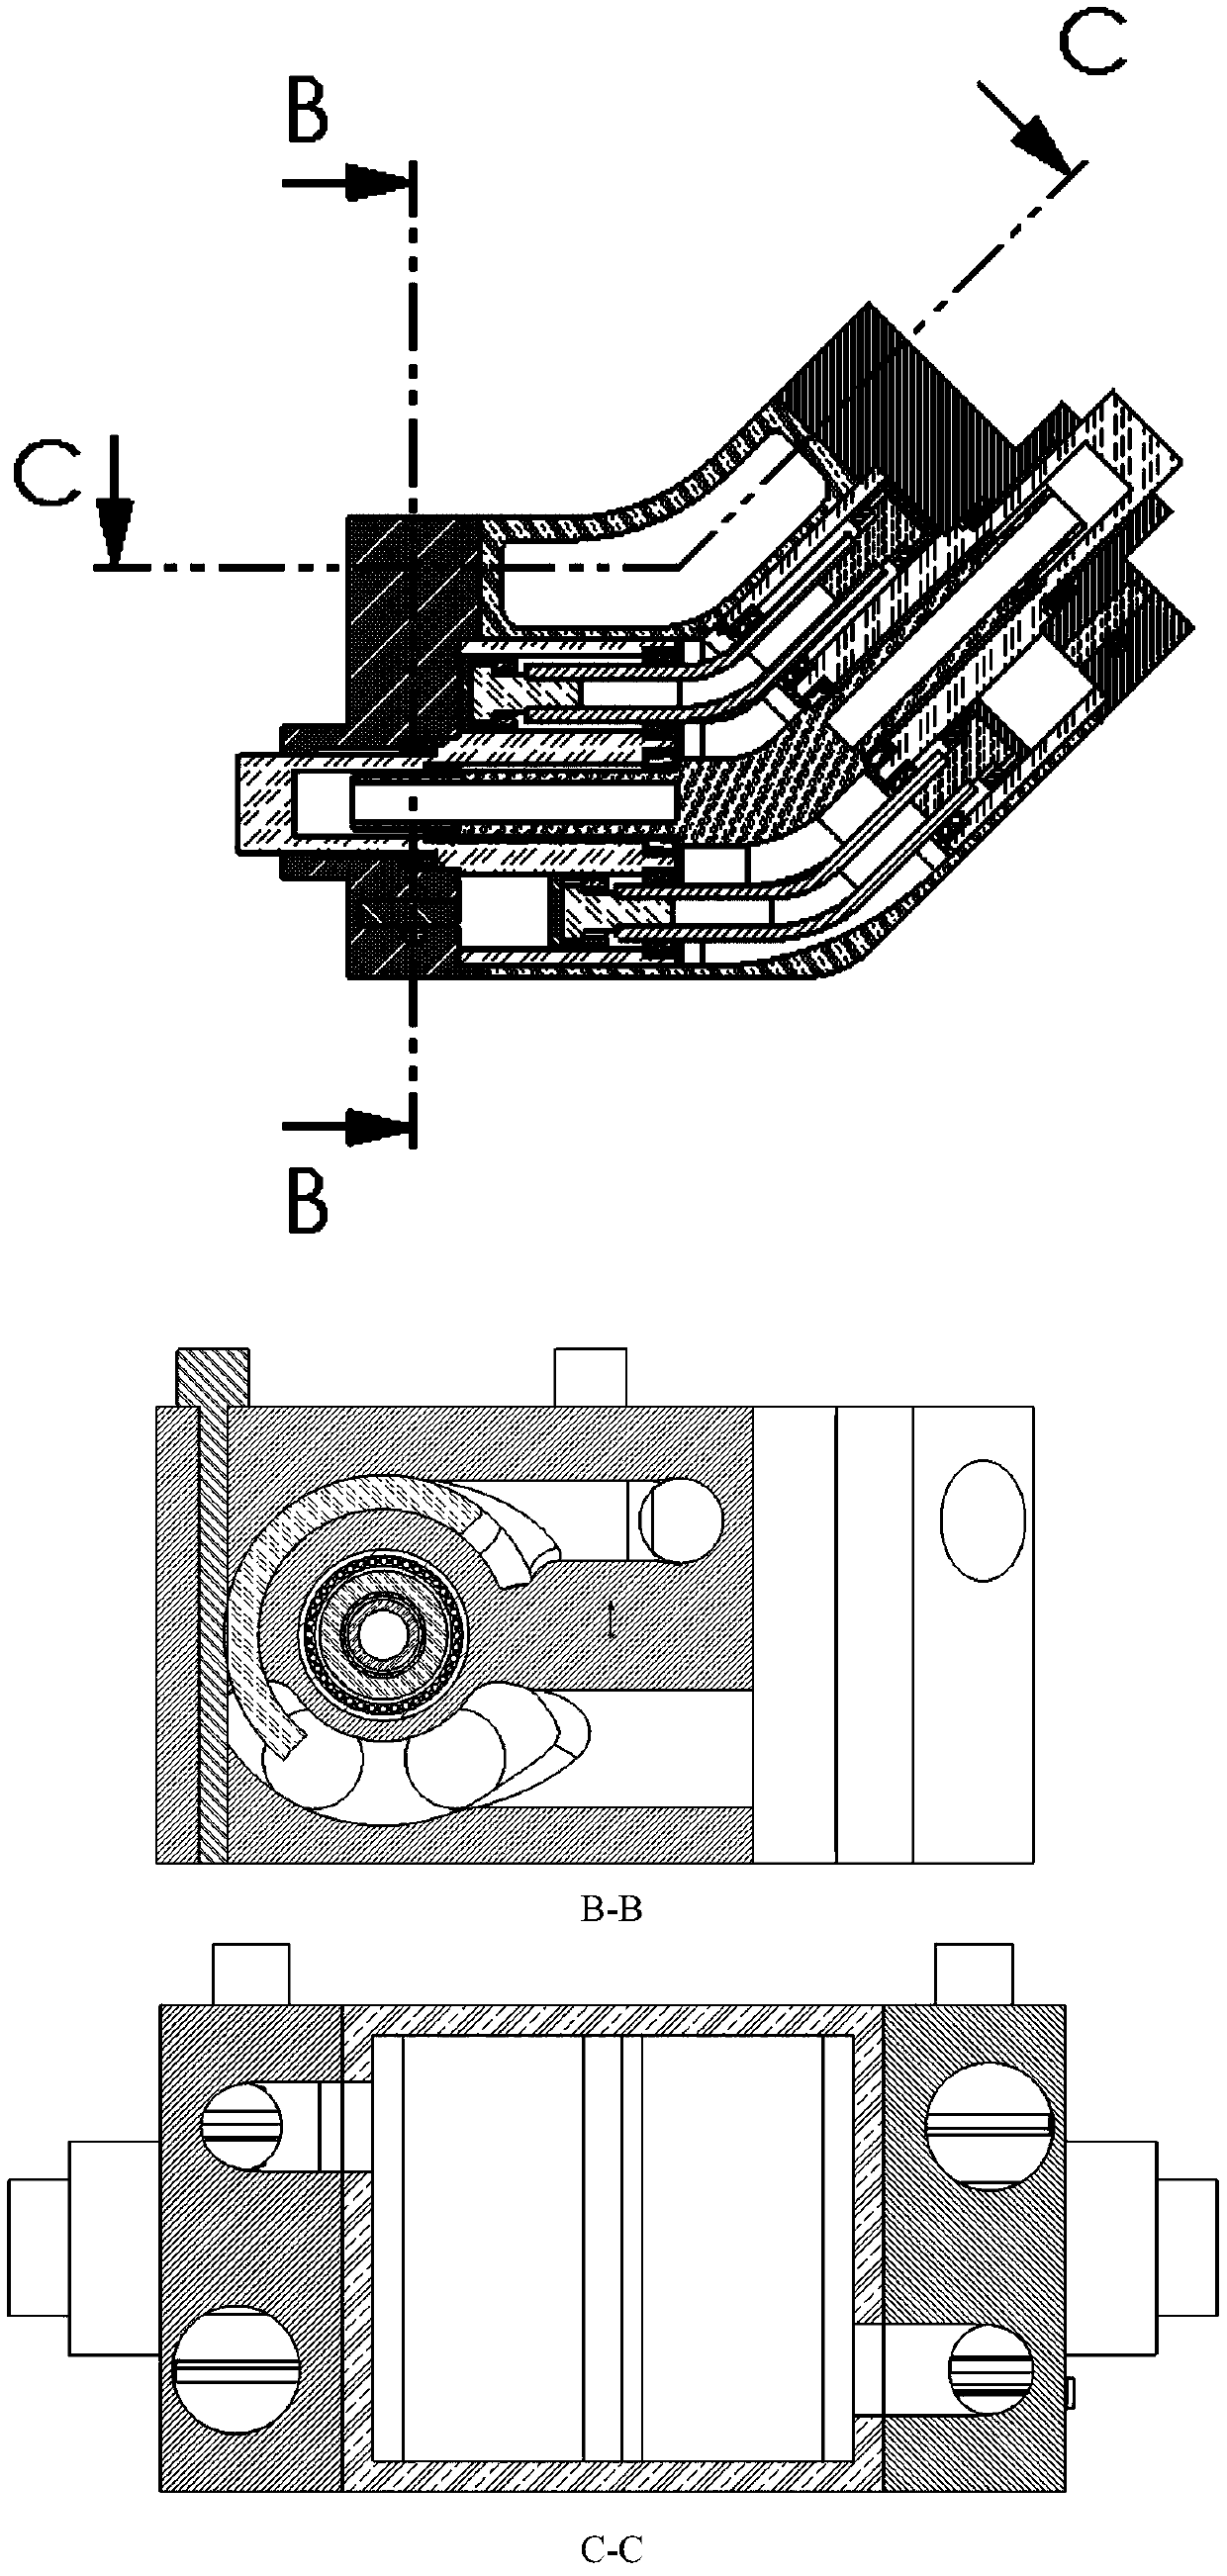 Two-rotor variable-cycle detonation piston engine